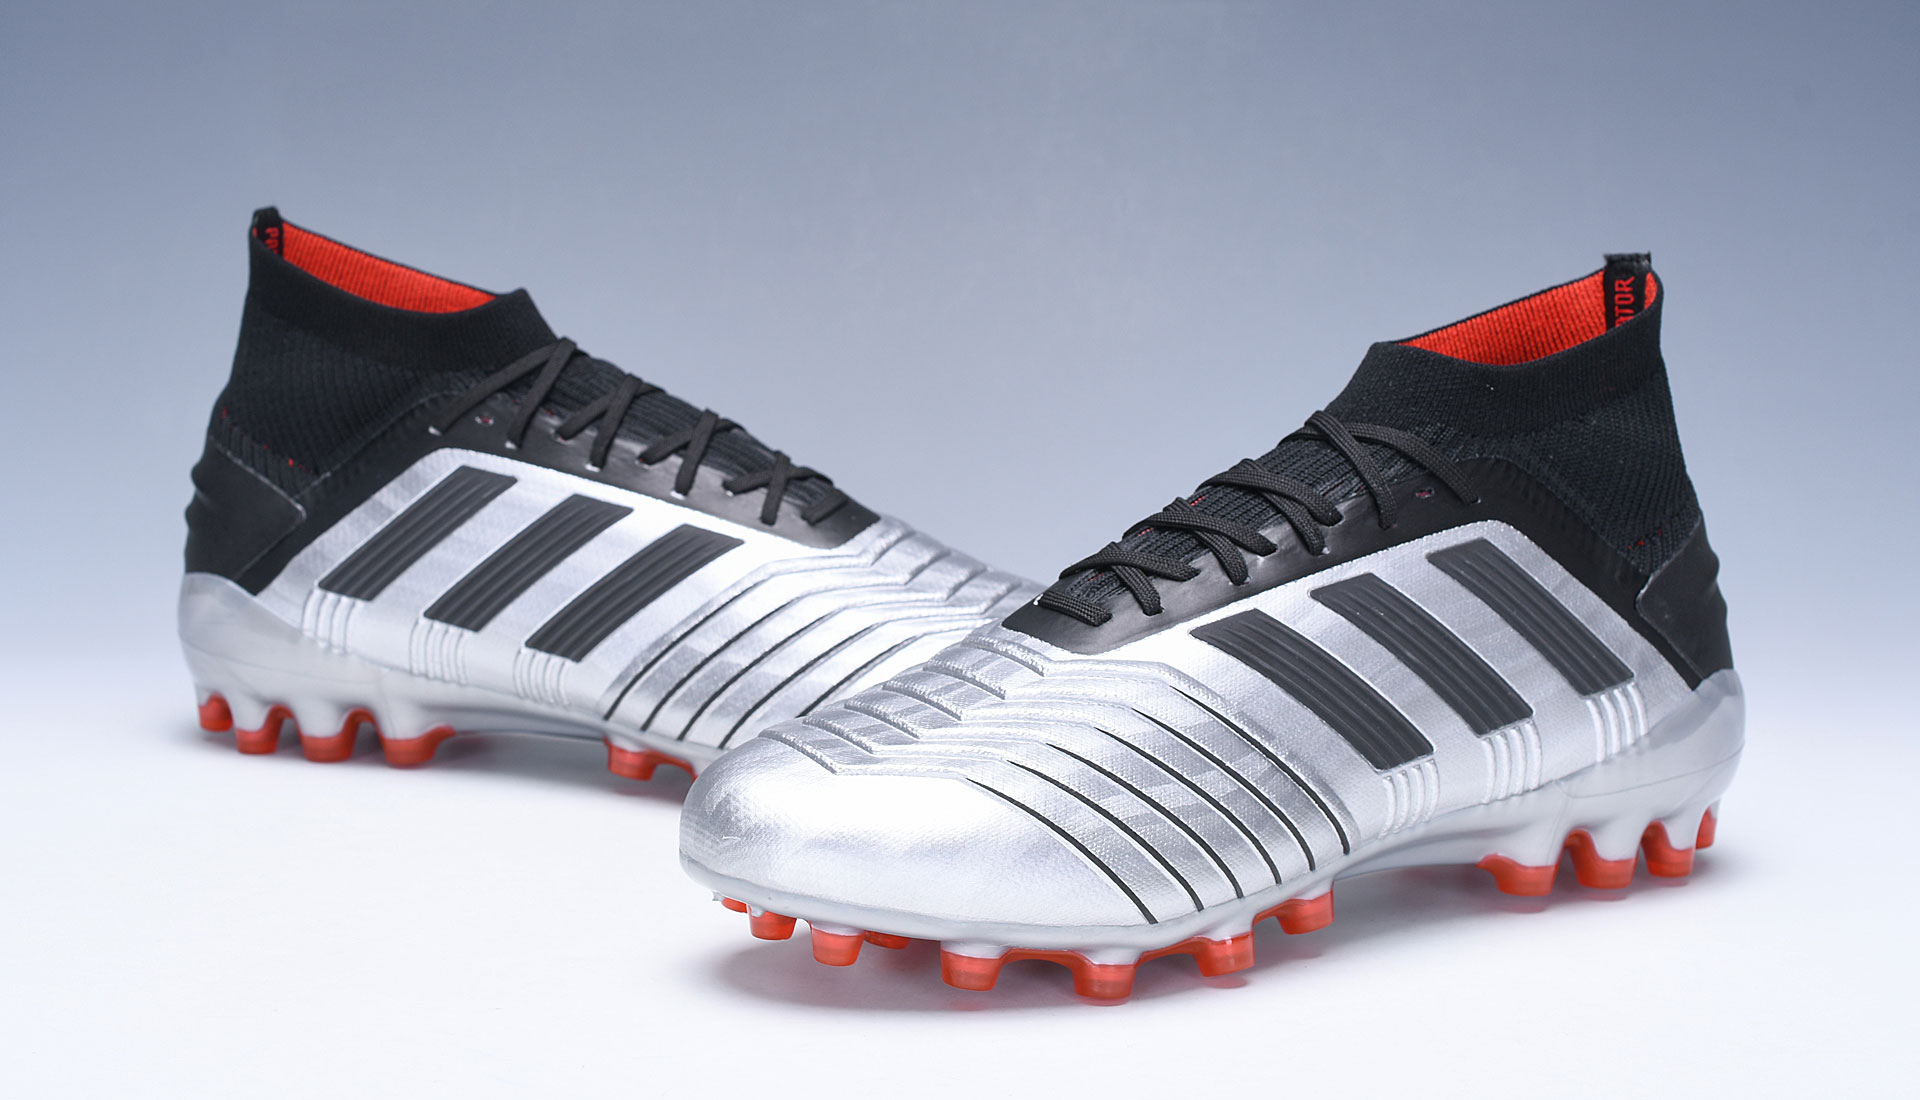 adidas Predator 19.1 AG Silver Red Football Boots buy